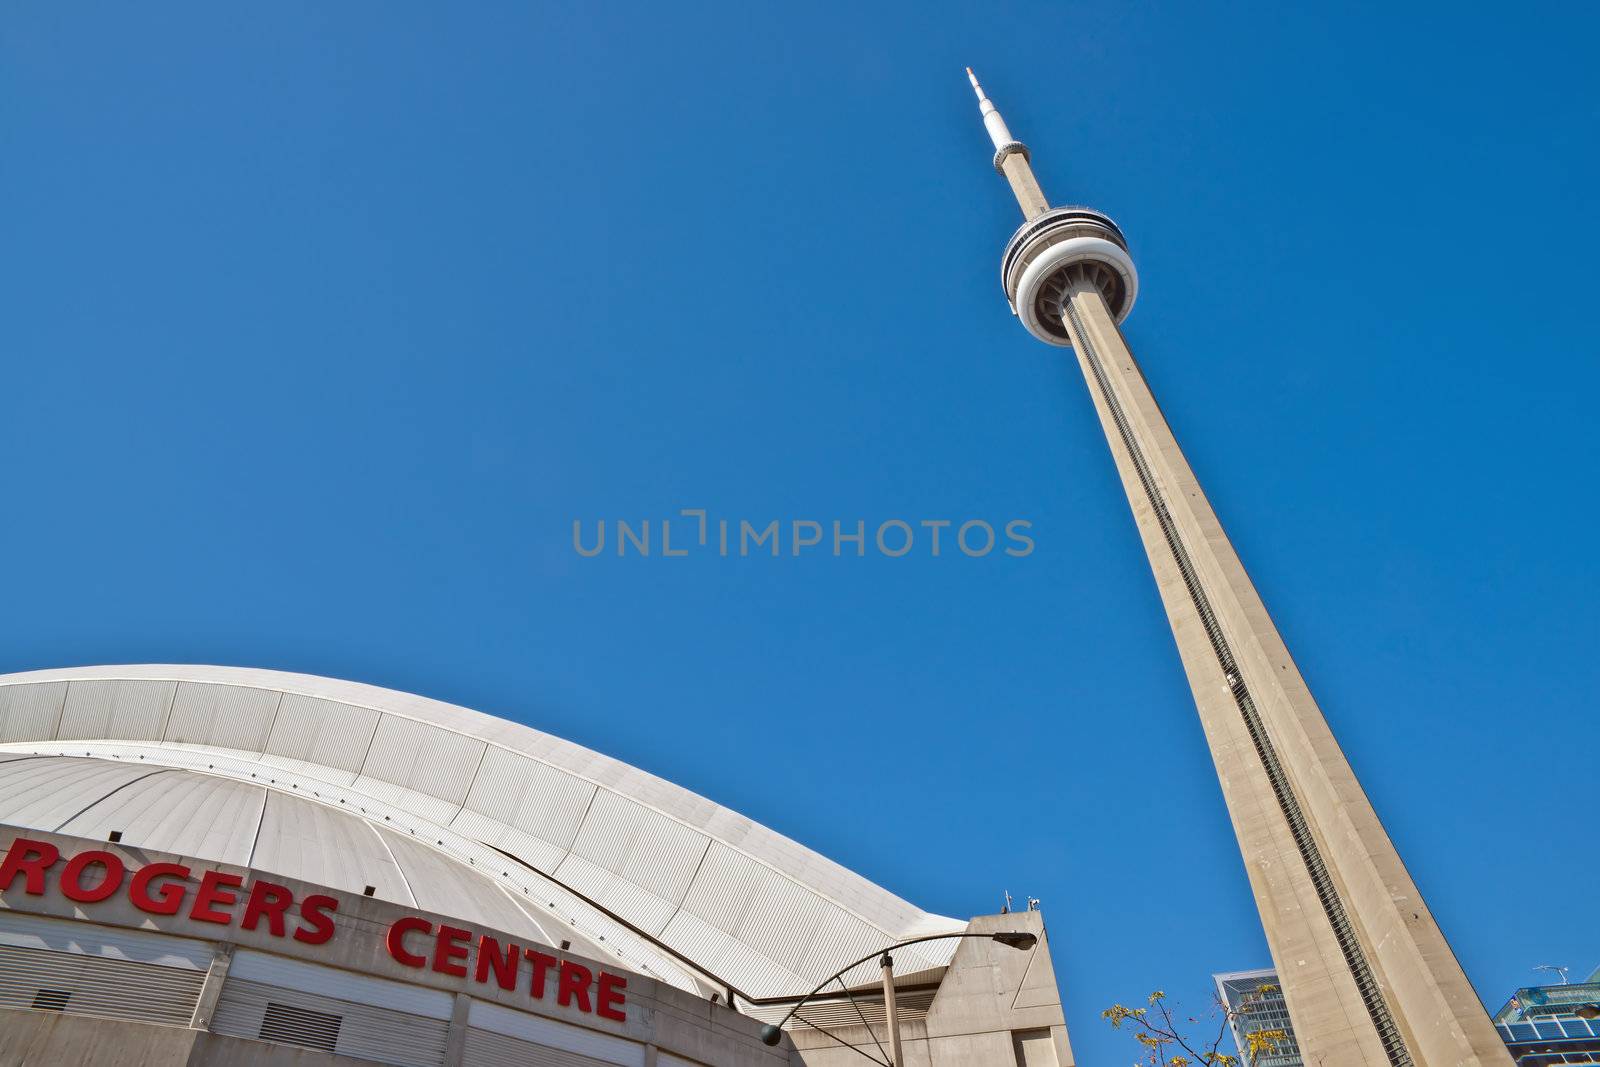 TORONTO, Canada, CN tower, Toronto, Ontario, Canada with skydome